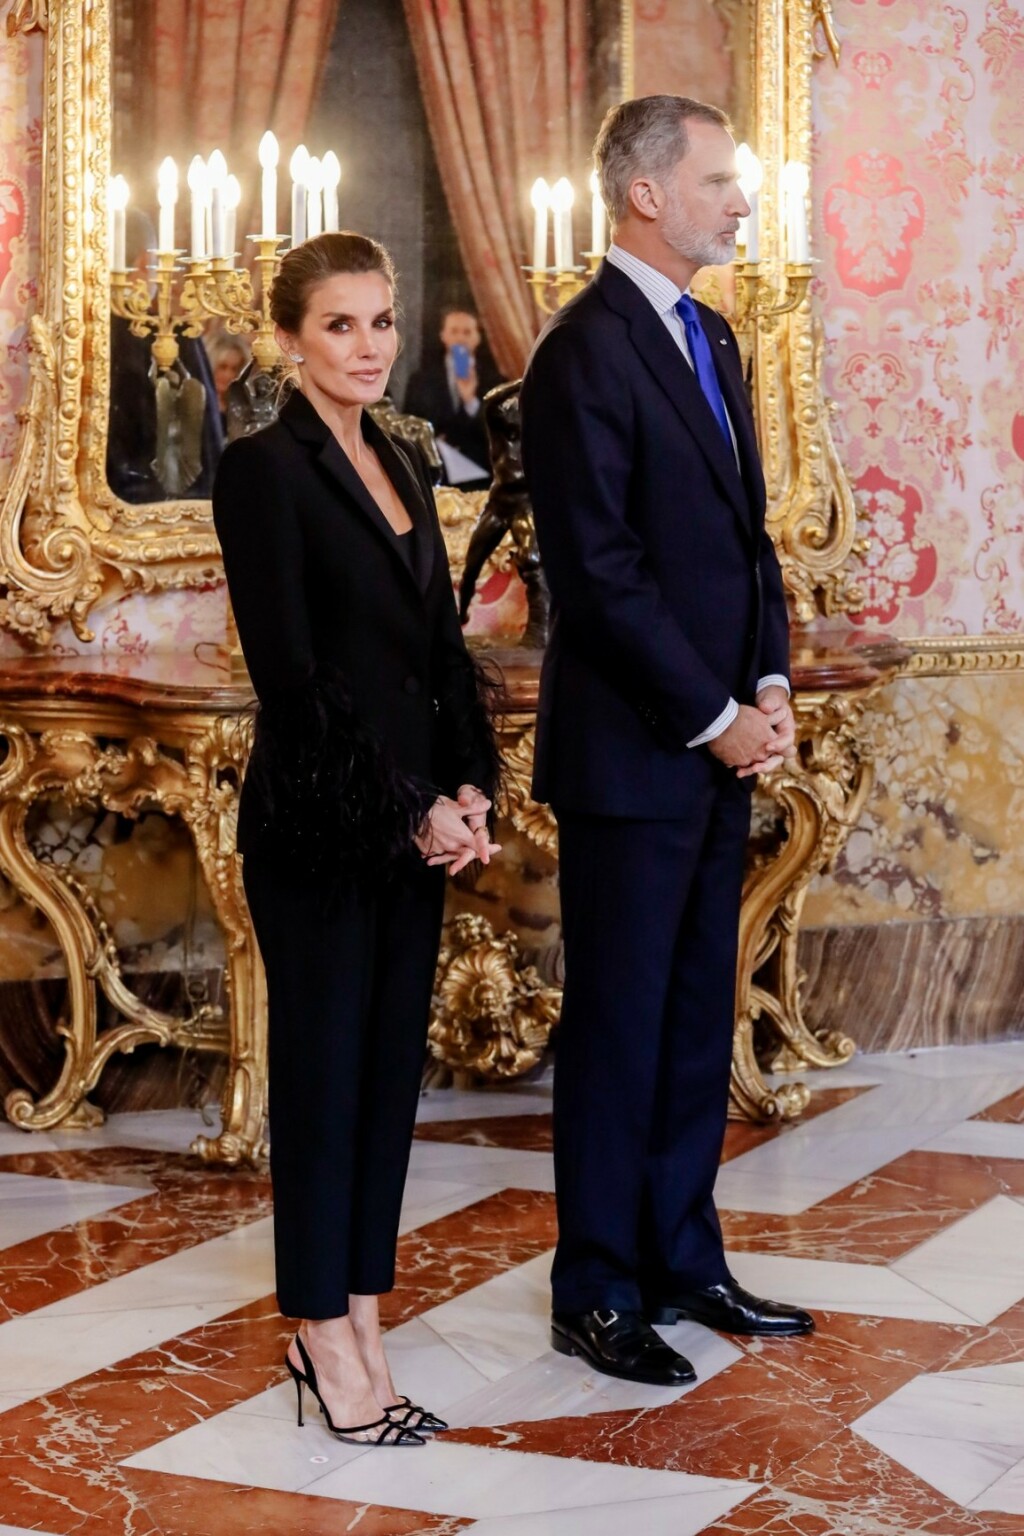 Kraljica Letizia u odijelu modnog brenda Pertegaz i štiklama Manola Blahnika